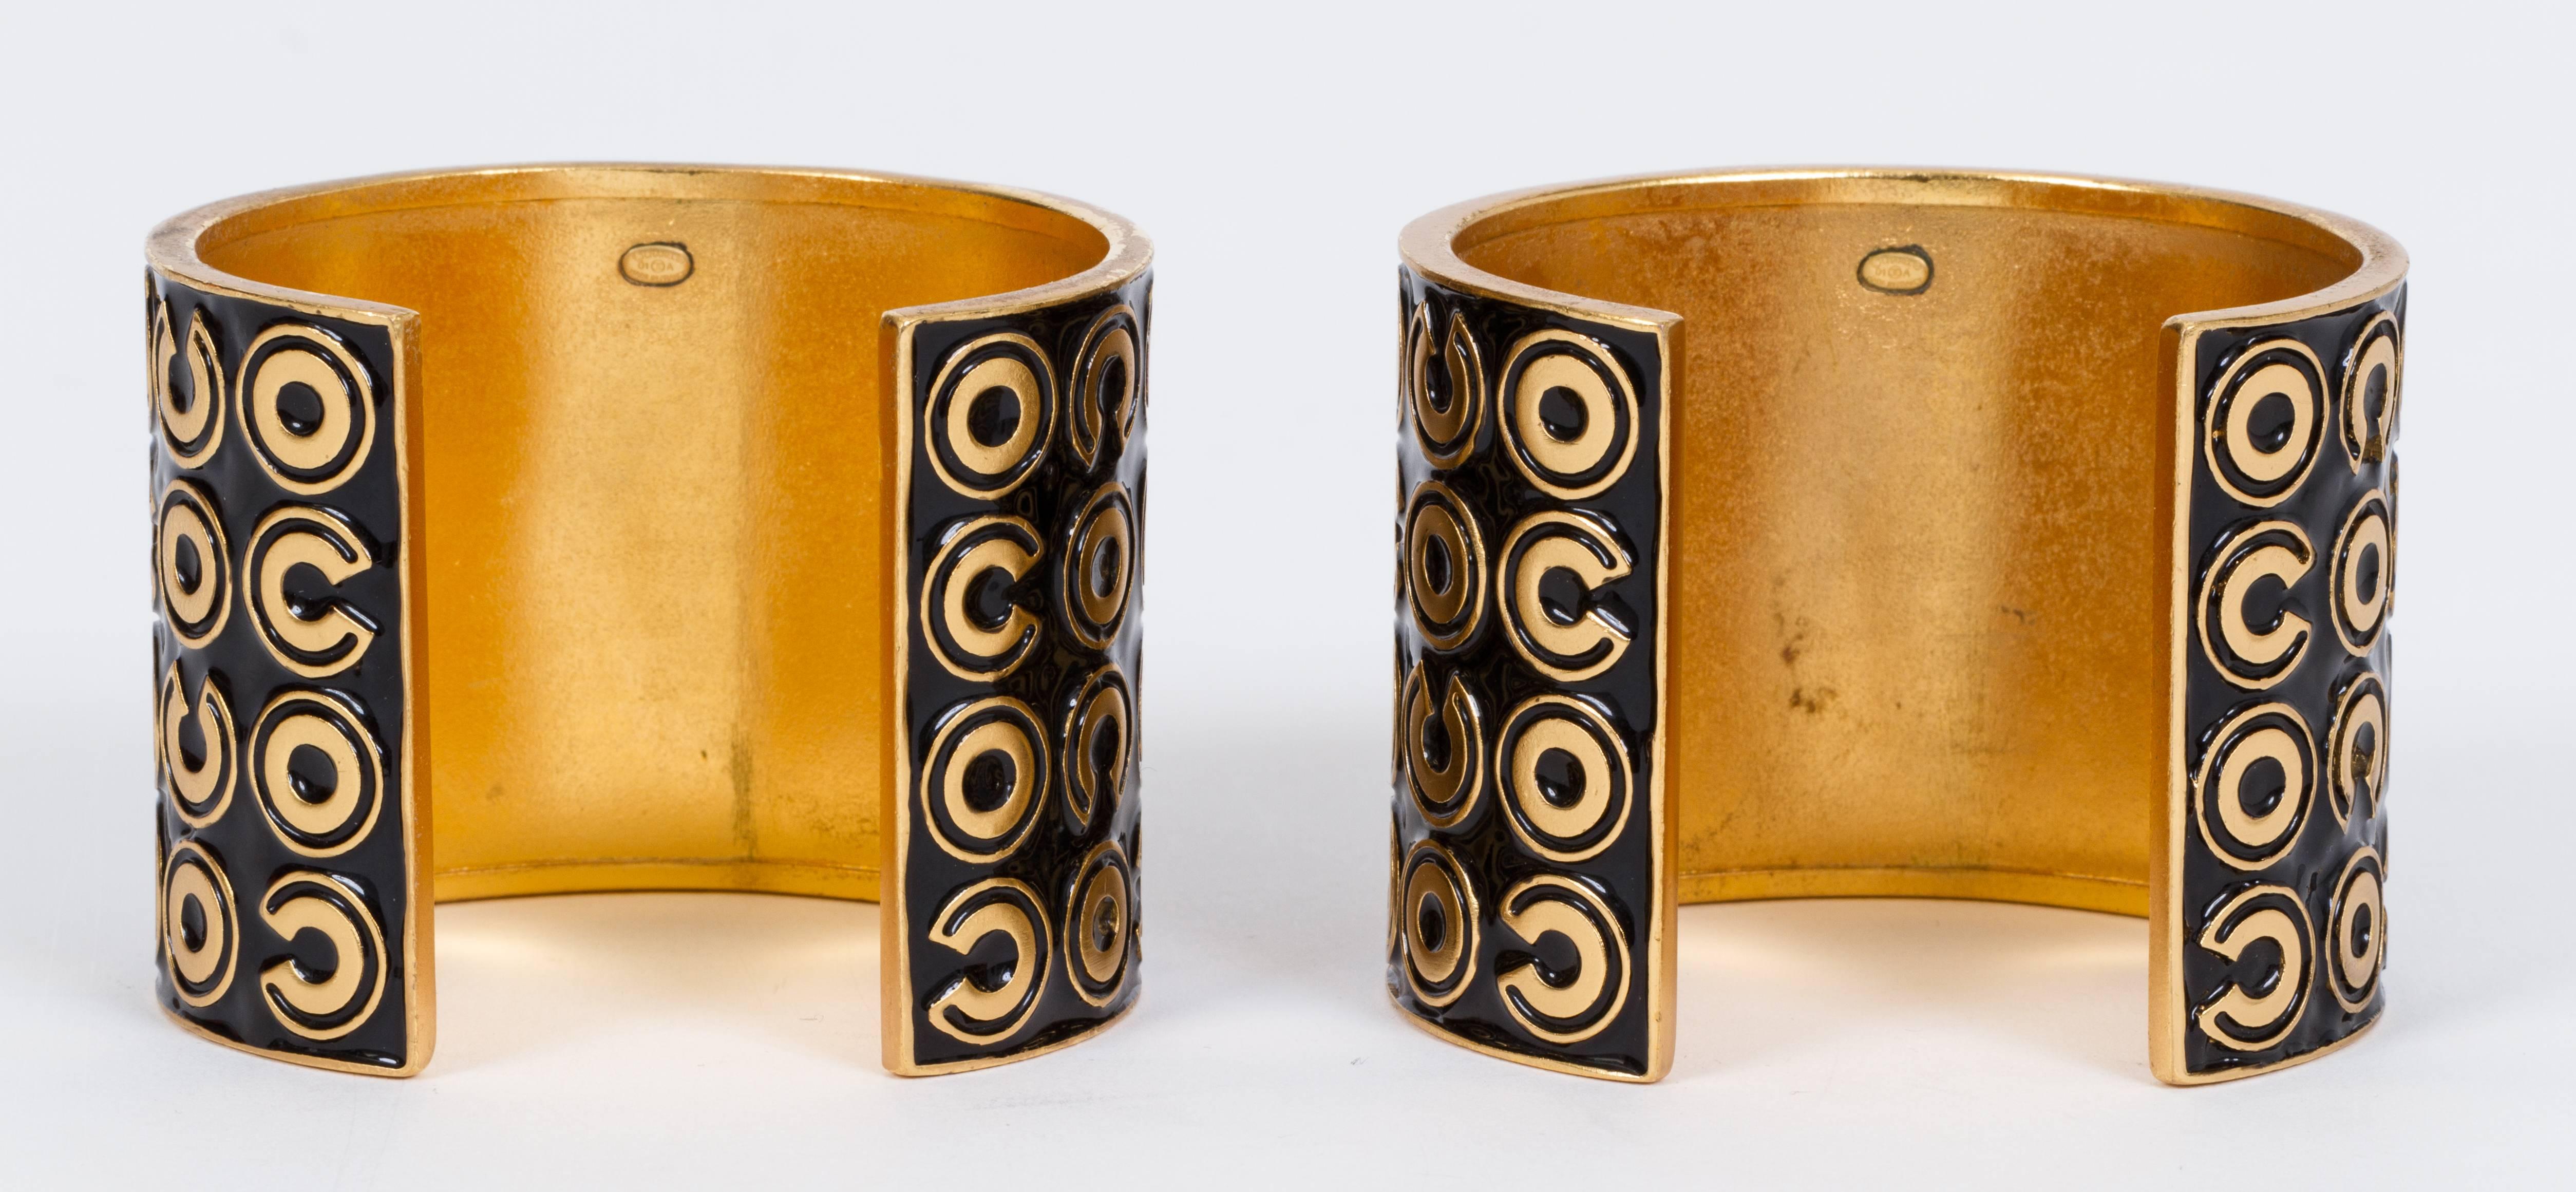 Women's Chanel Pair of Black/Gold Cuff Bracelets